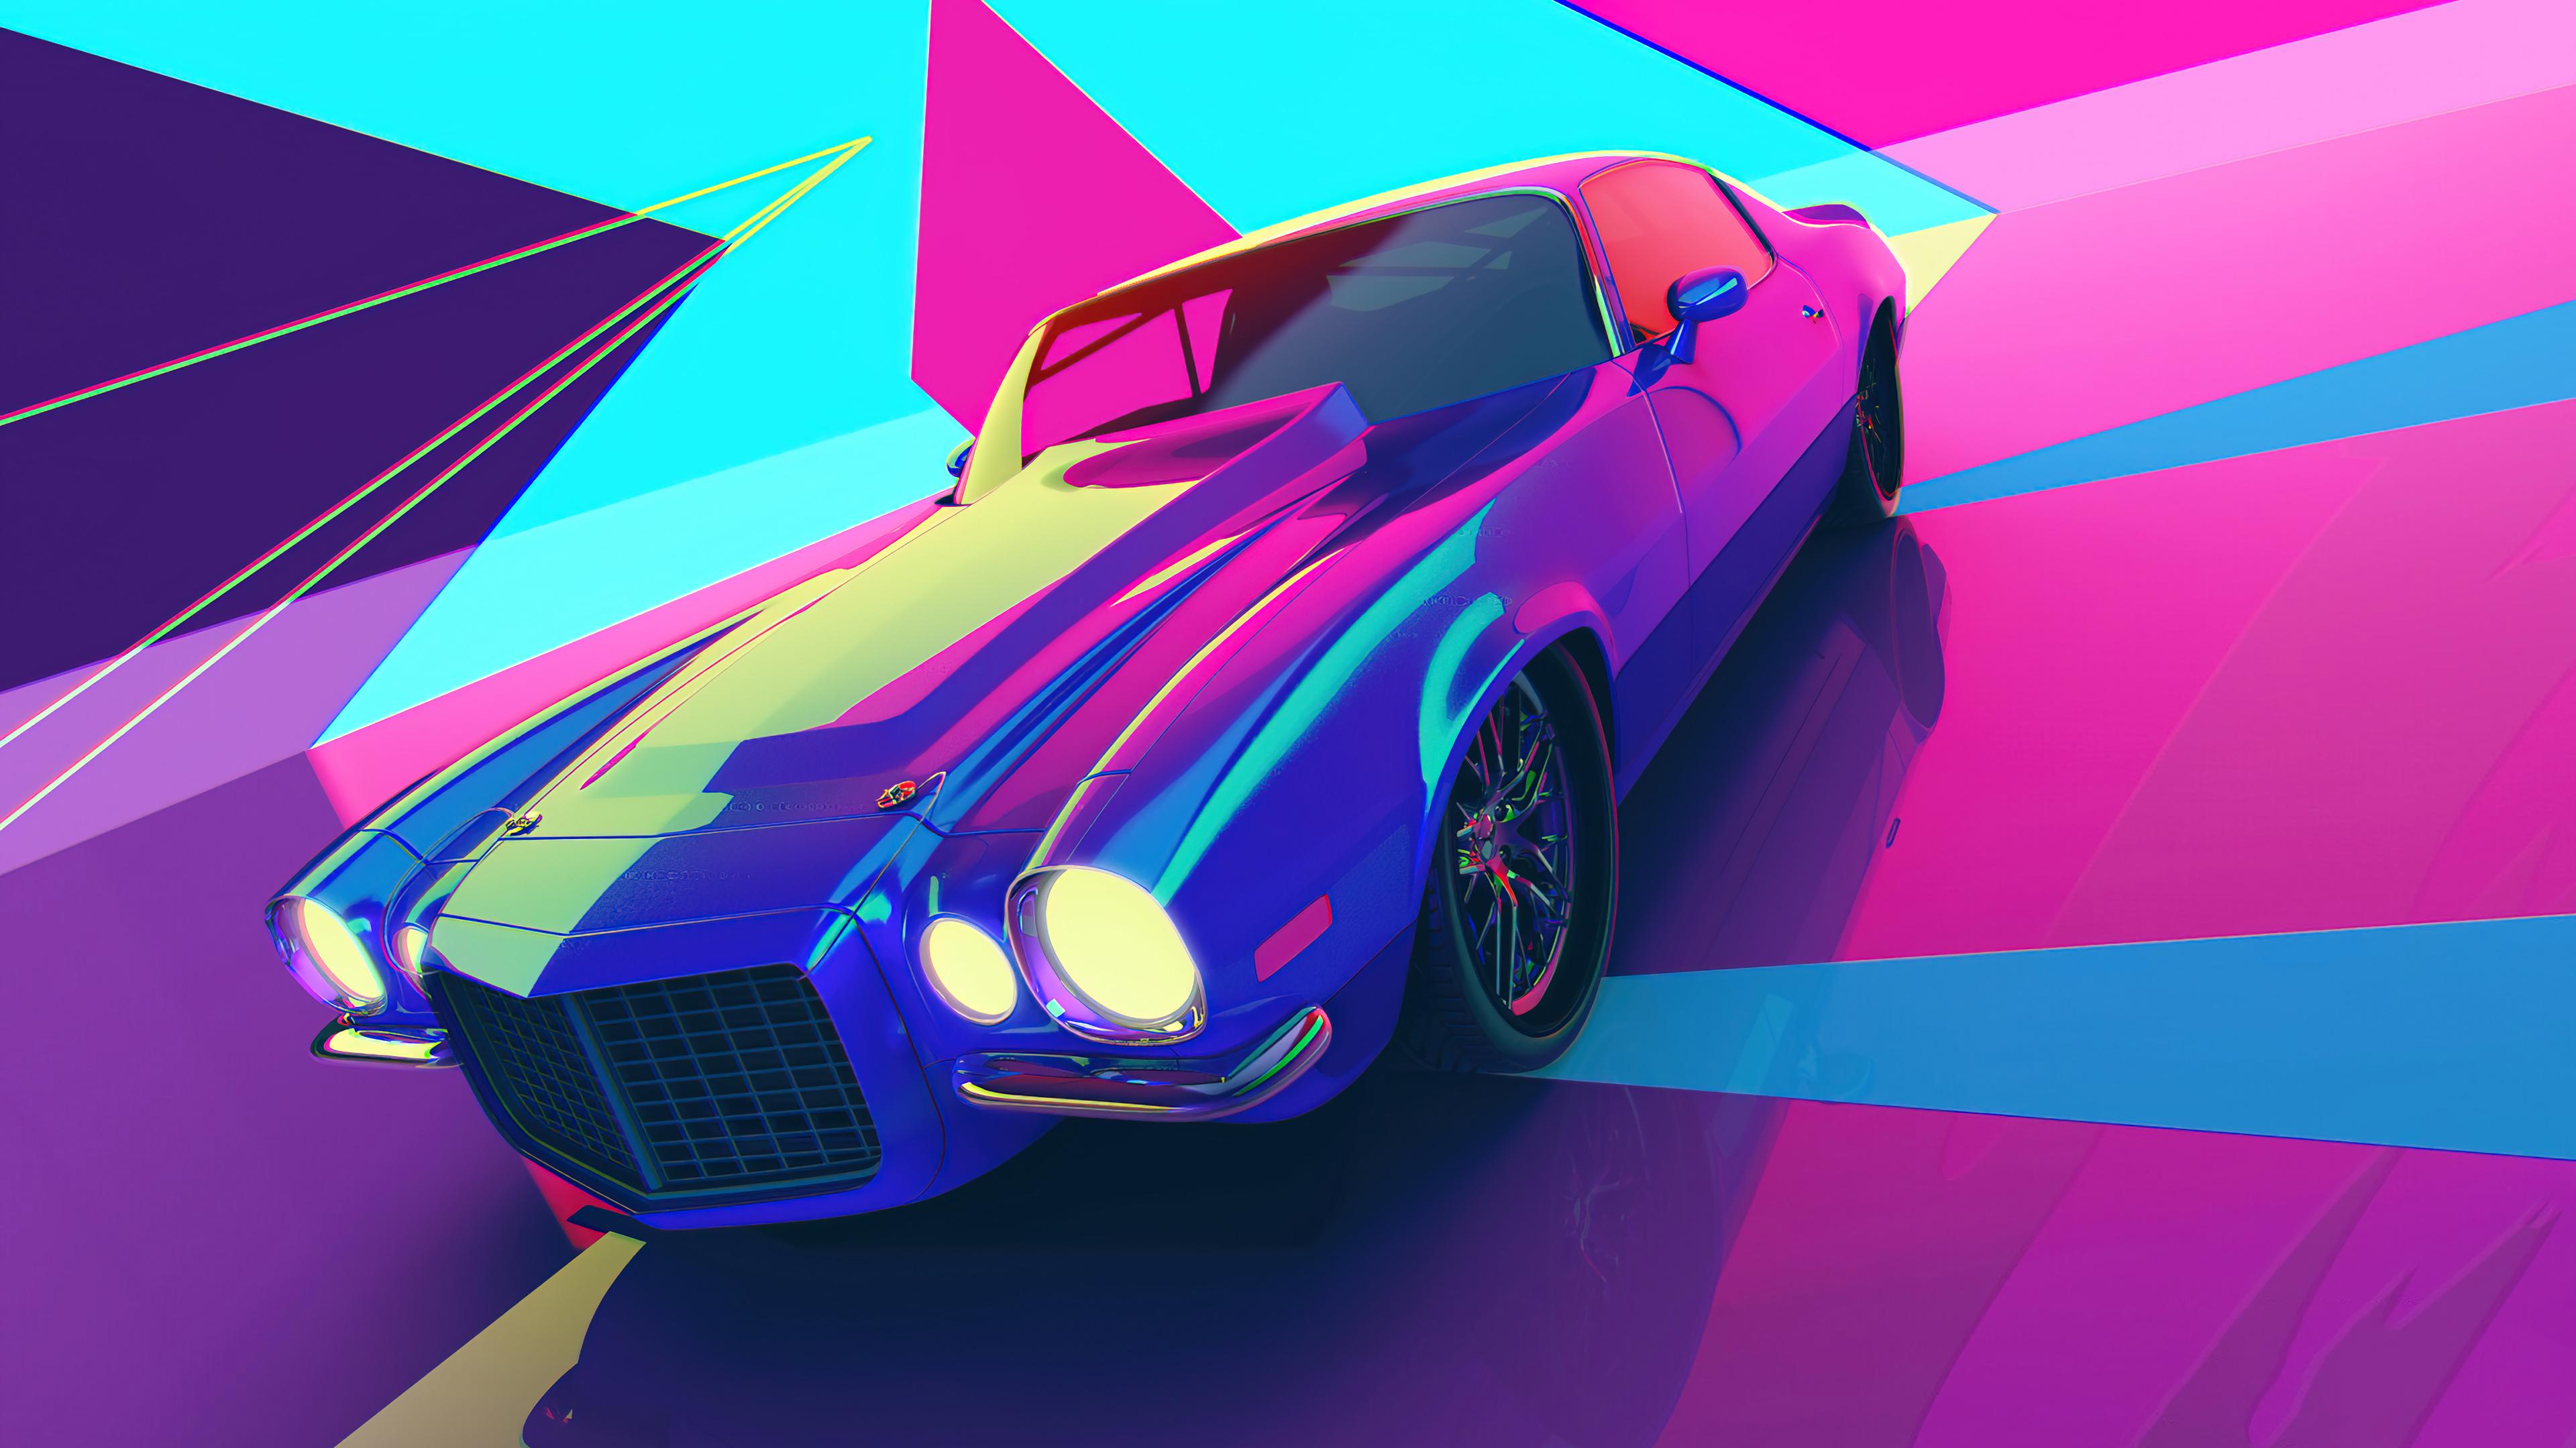 Sports Car Colorful Abstract Digital Art Wallpaper 4k